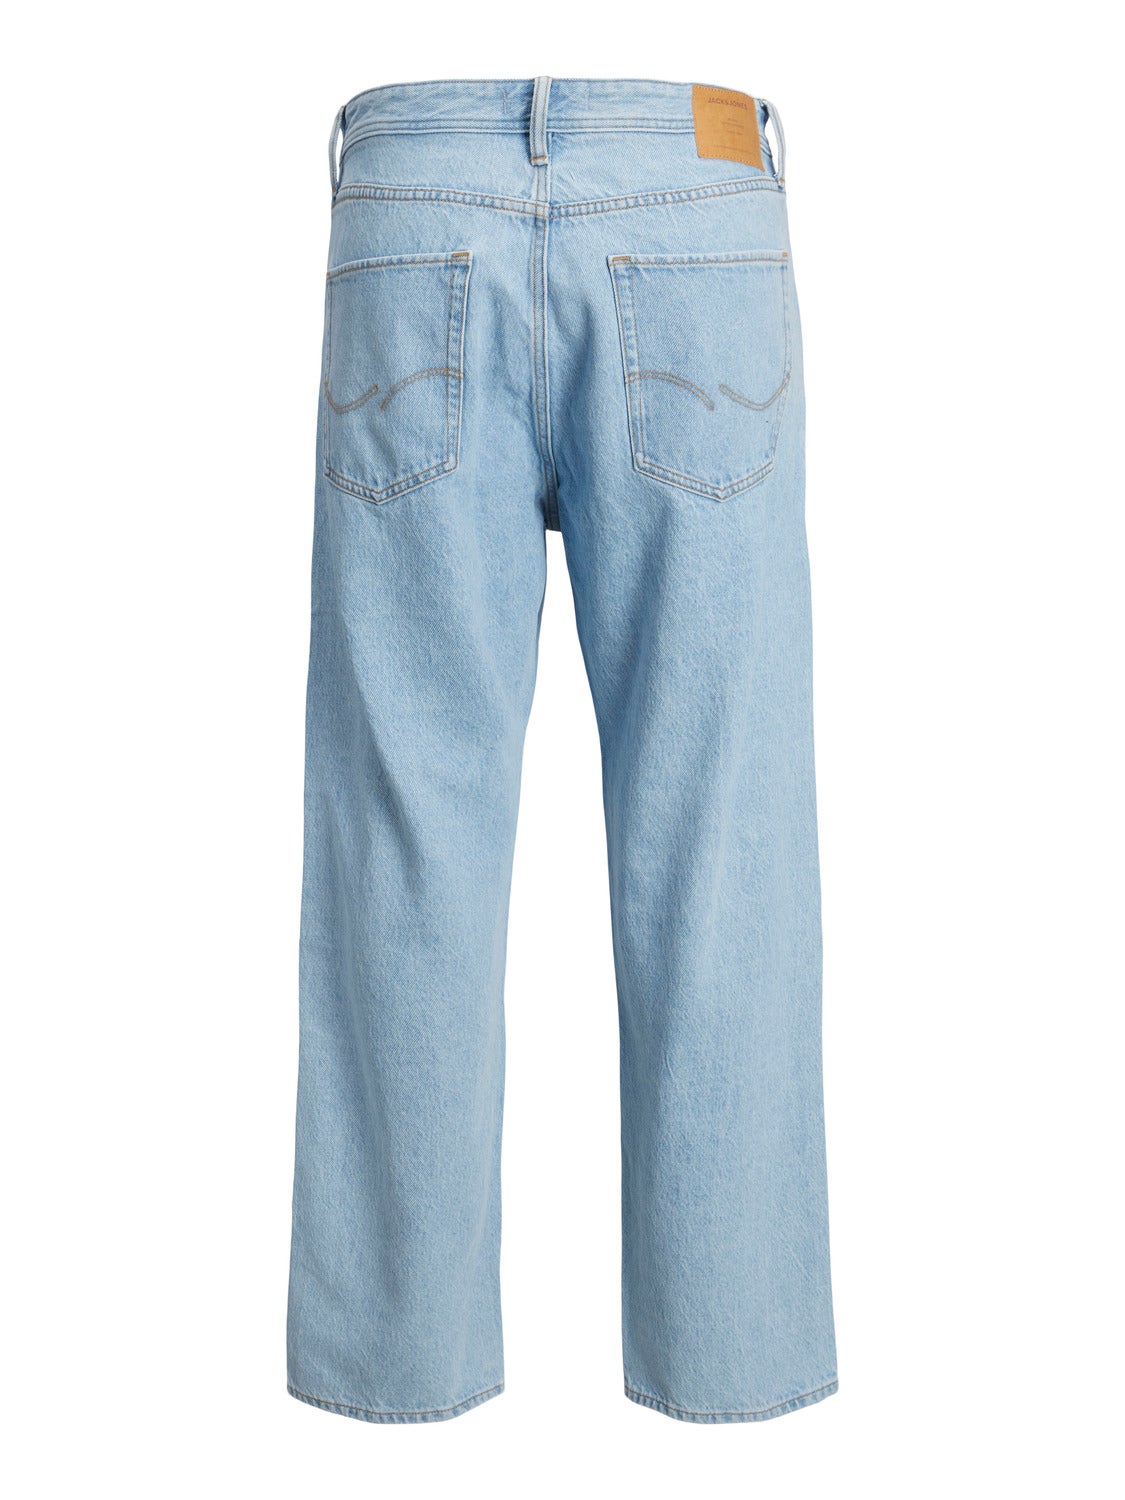 Jeans Jack & Jones Black size 33 US in Cotton - elasthane - 36331599